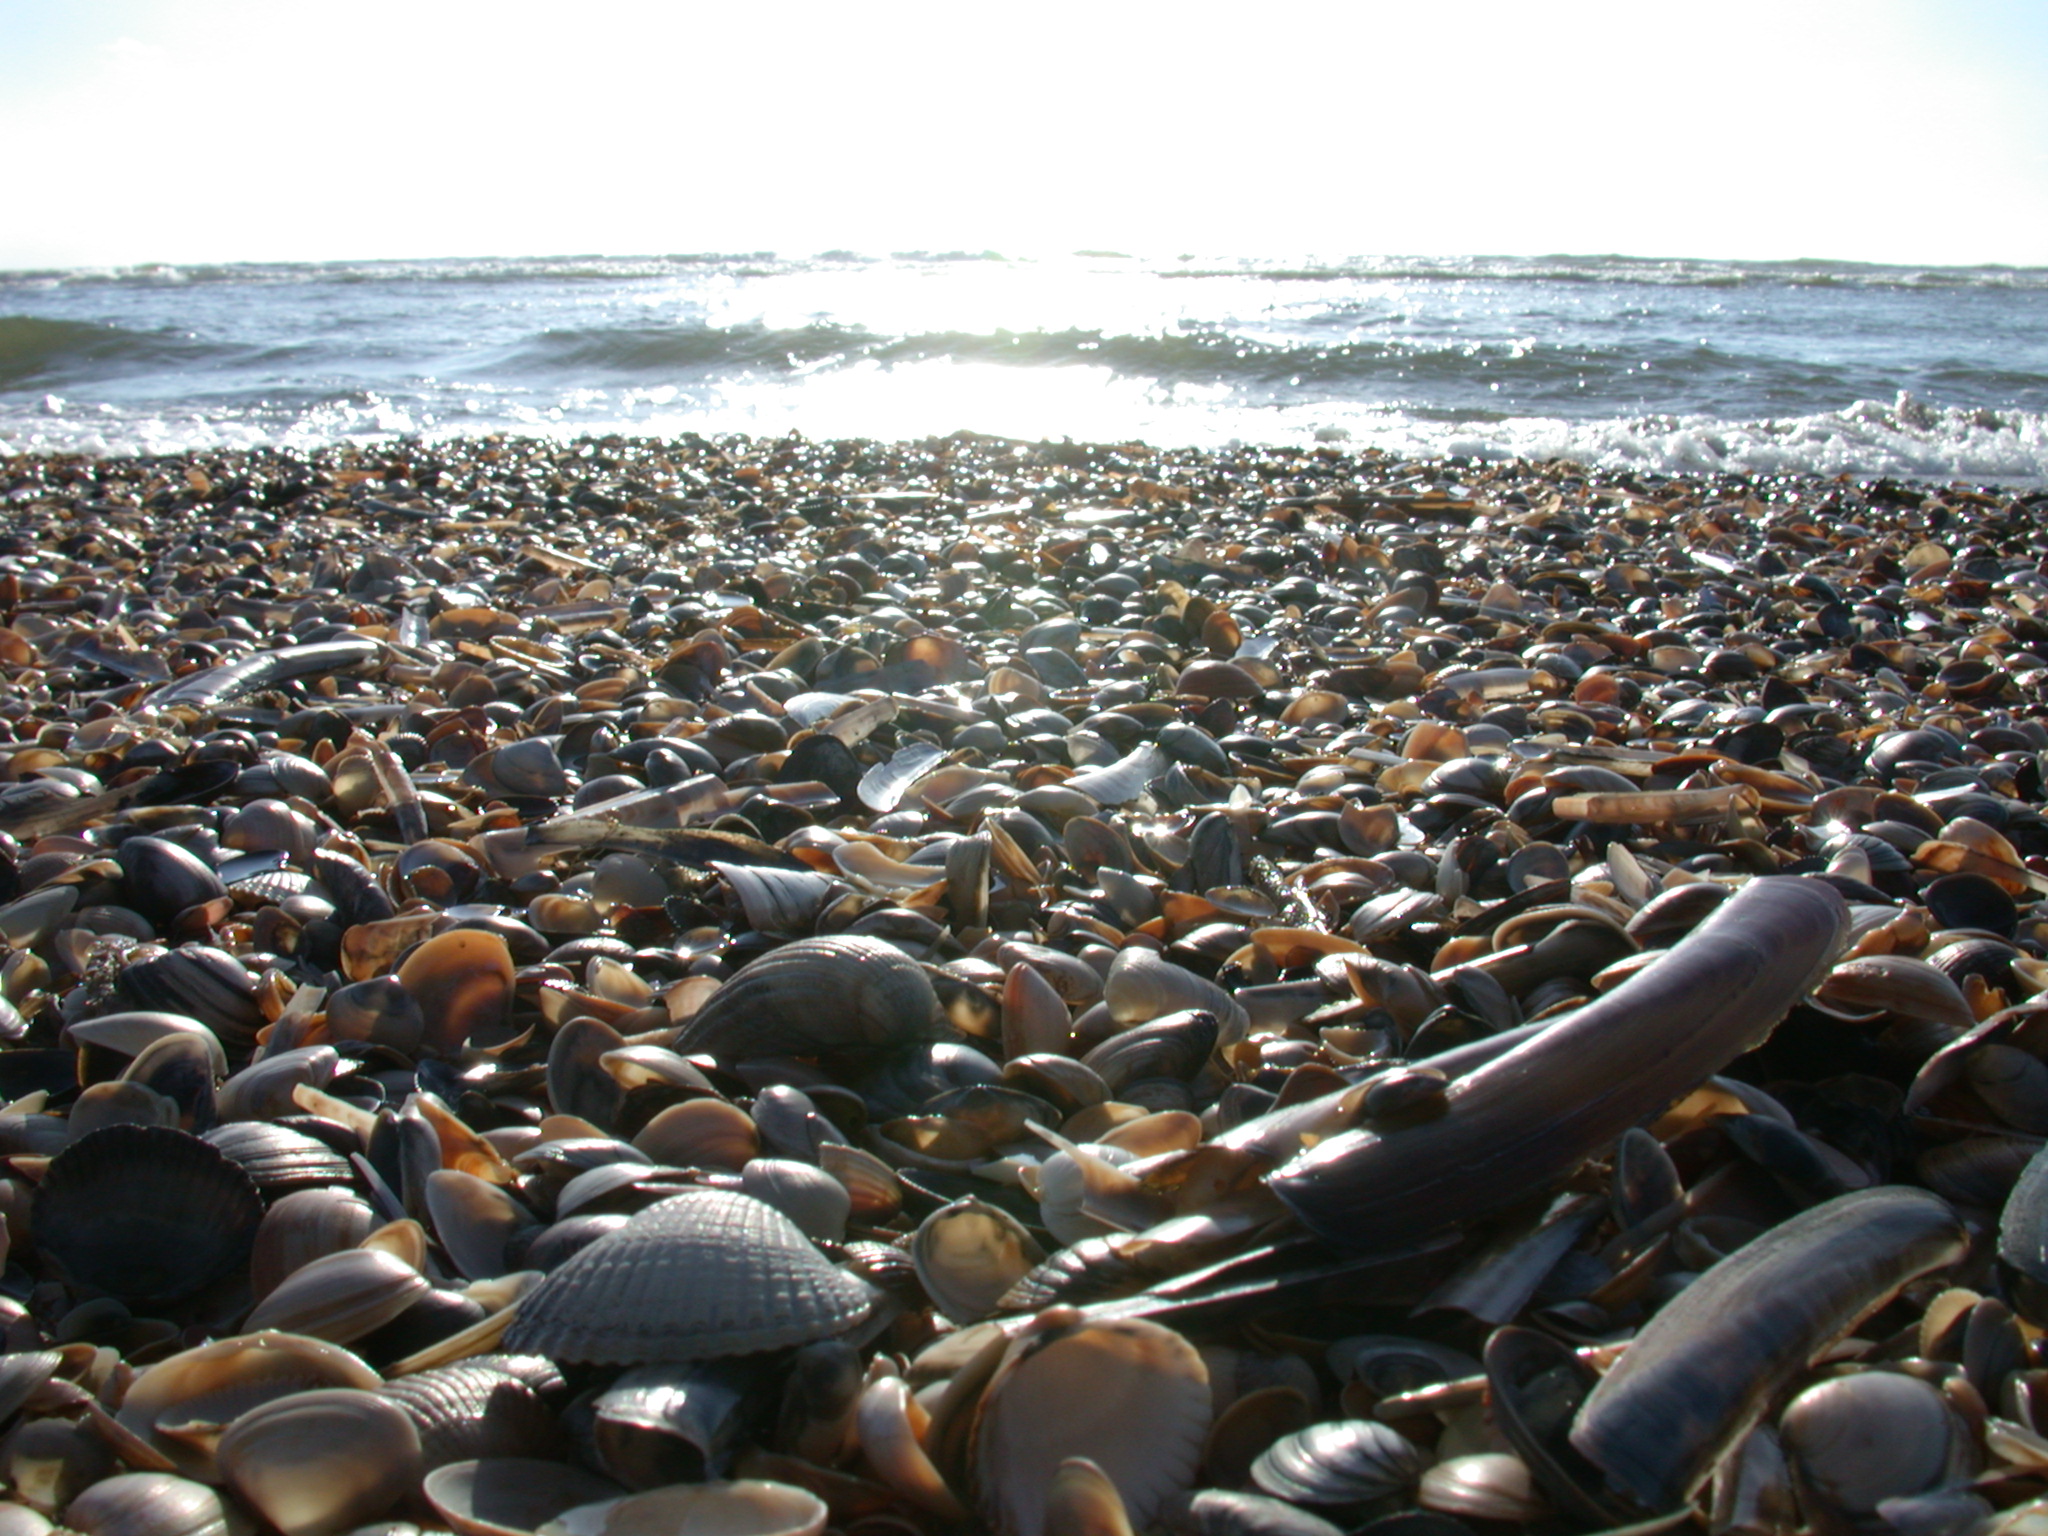 shiney shells on the beach sun waves beach coast image